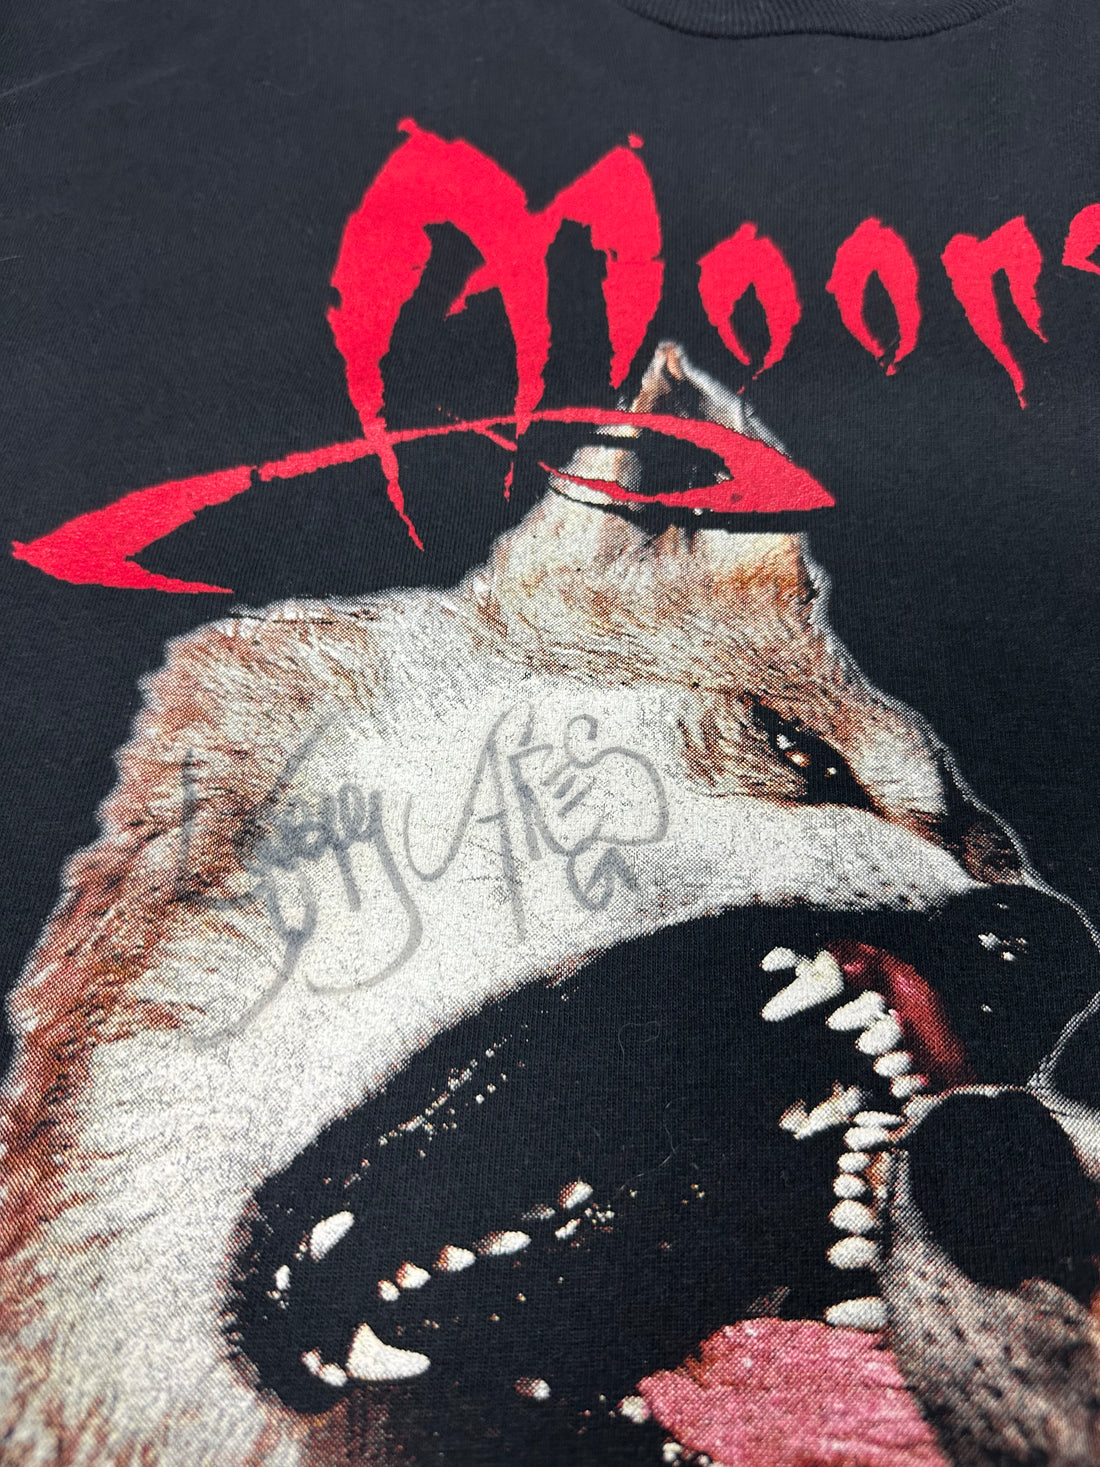 Moonspell 1995 Wolfheart Vintage Longsleeve